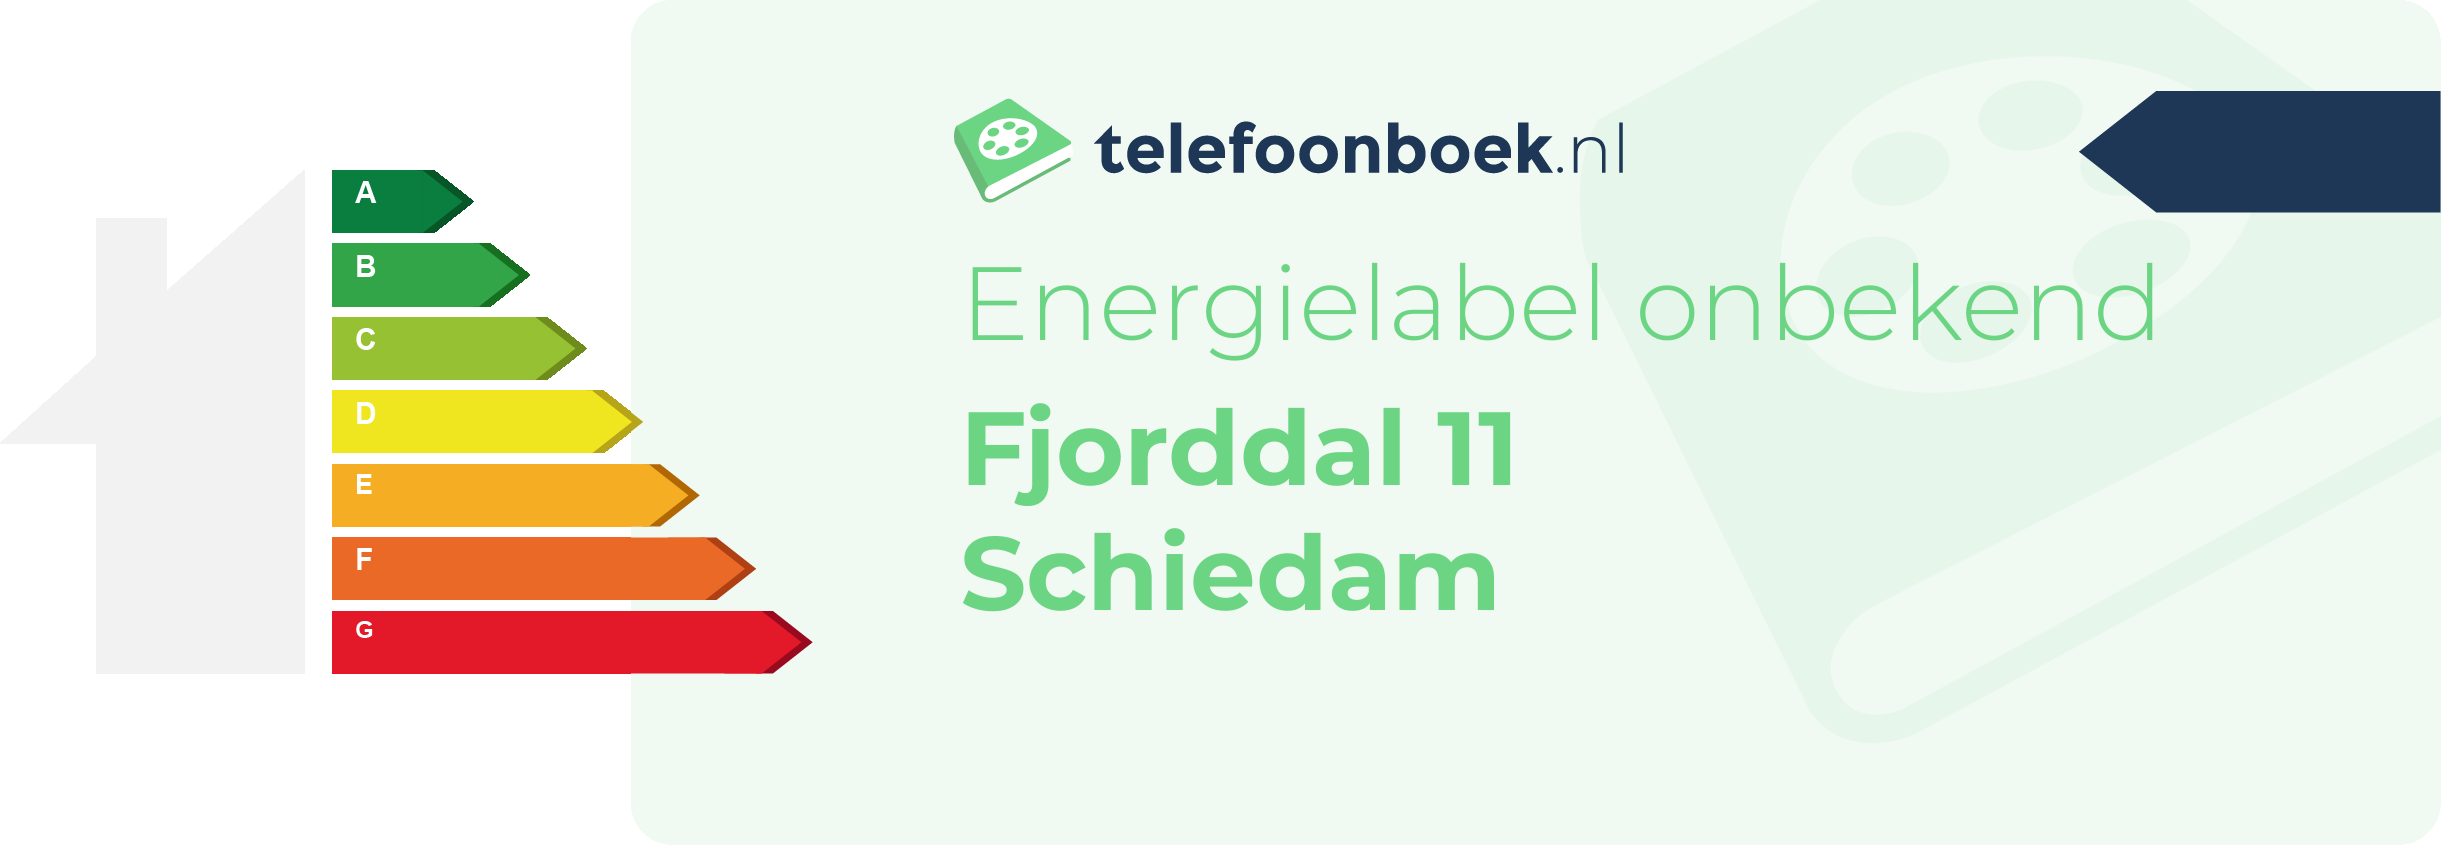 Energielabel Fjorddal 11 Schiedam